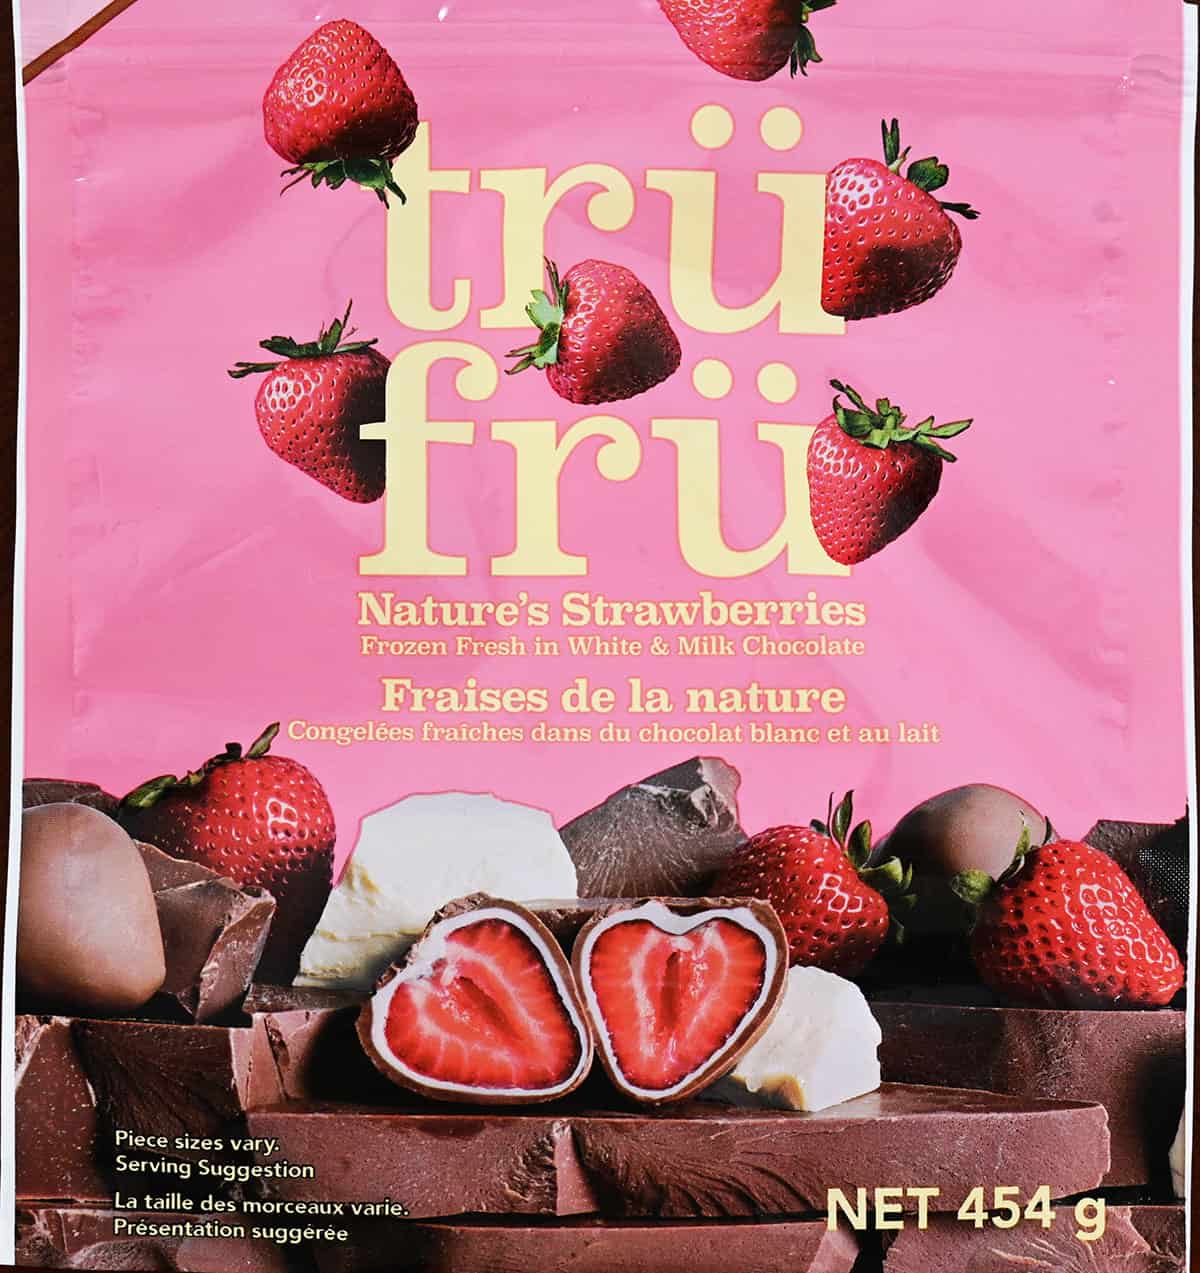 Costco Tru Fru Frozen Chocolate Covered Strawberries bag, close up image. 